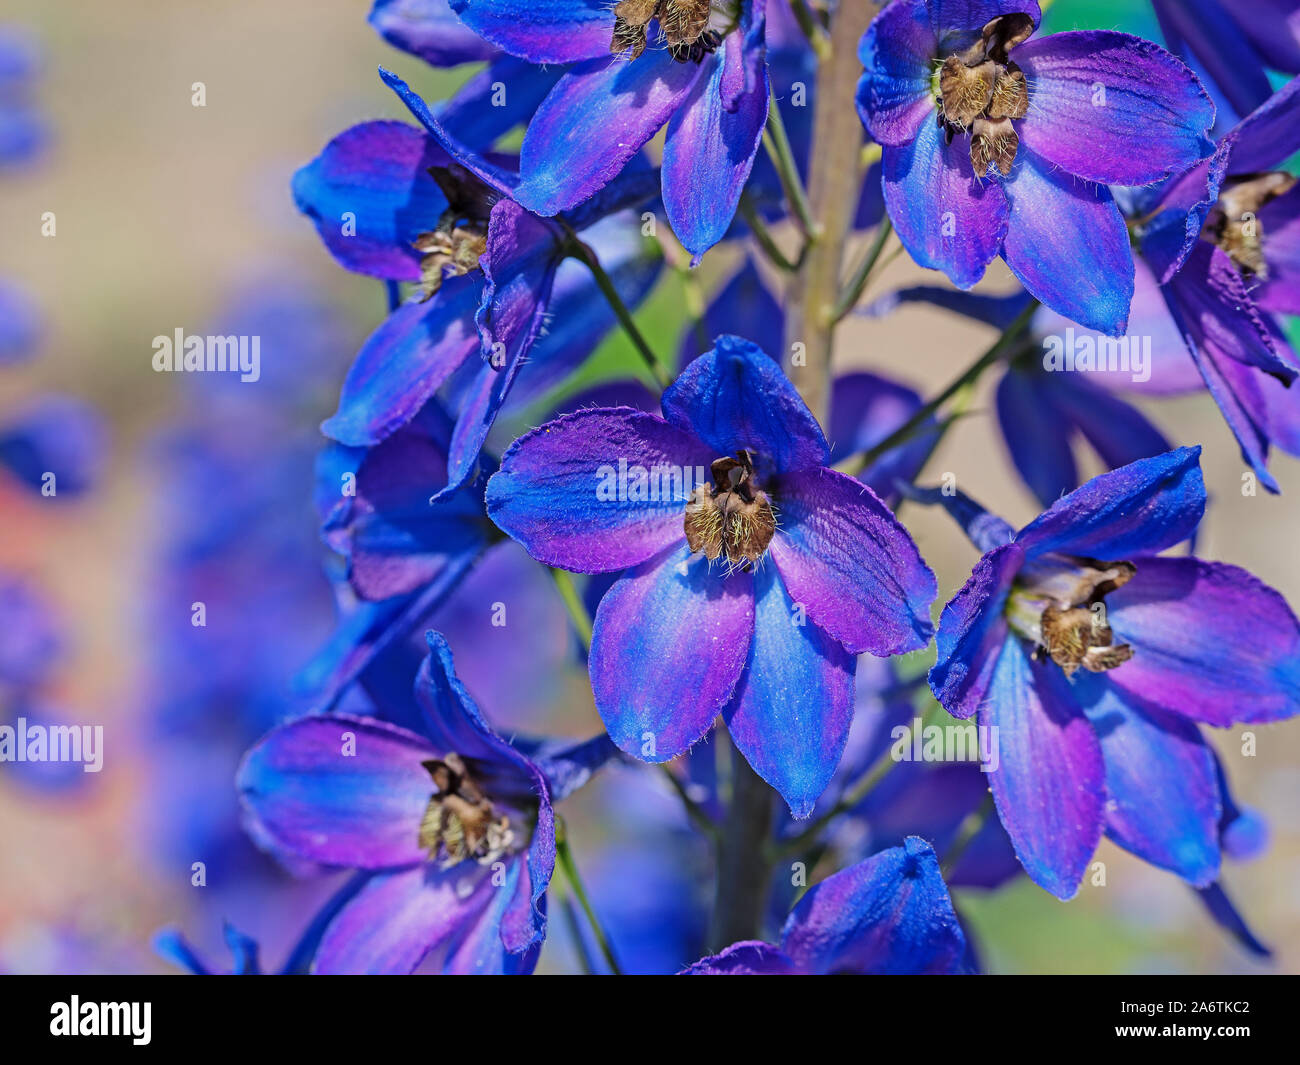 Blossoming knight spur, delphinium, in the garden Stock Photo